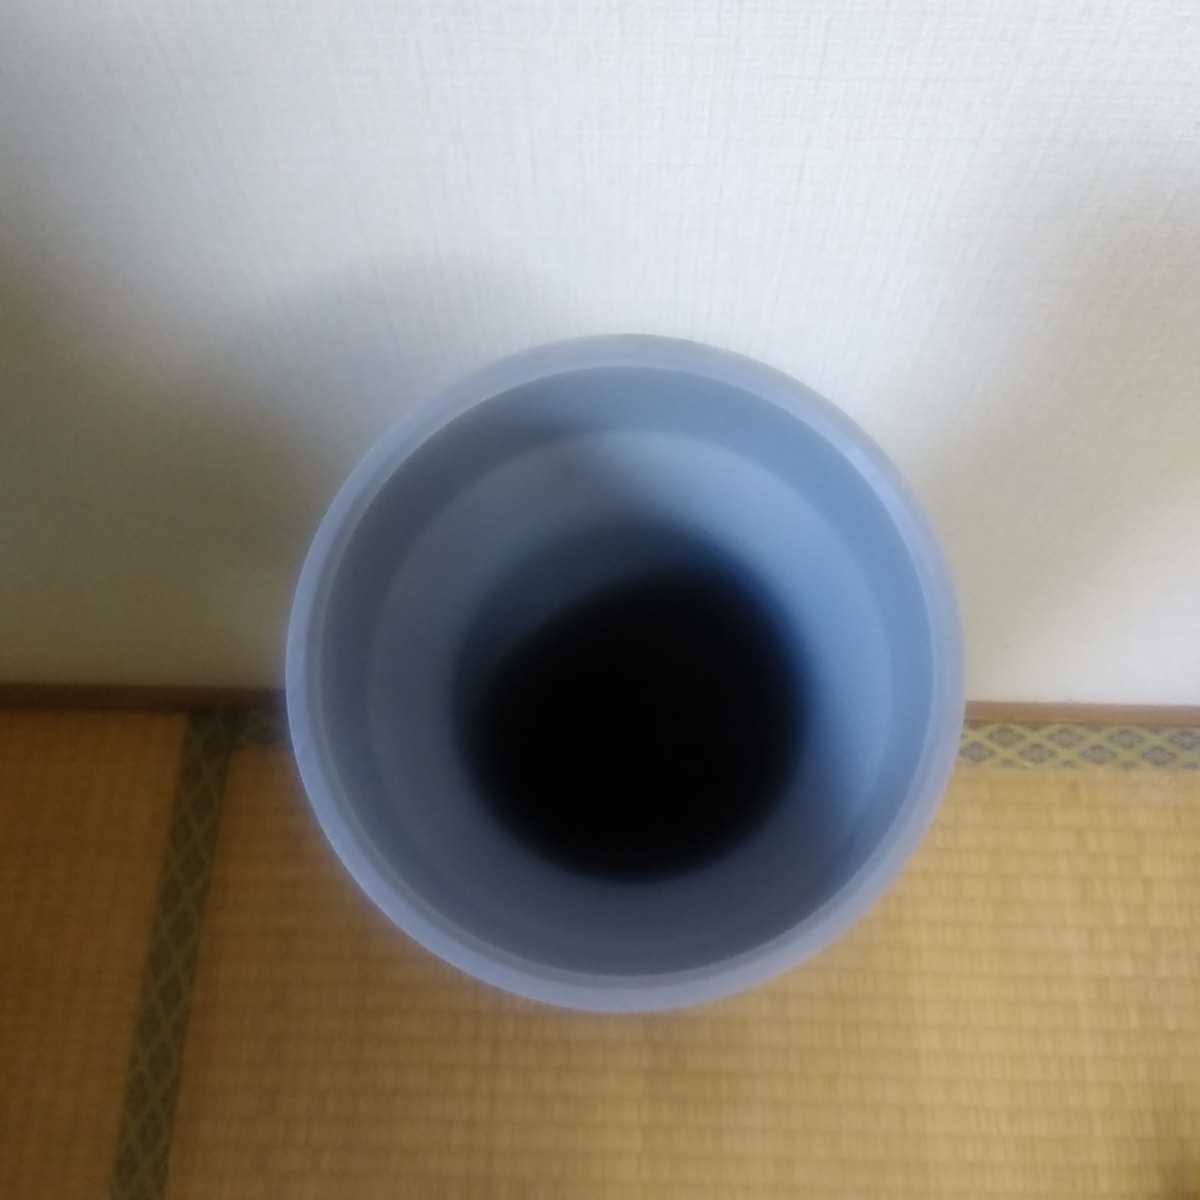 TOTO/トート 塩ビ排水管(10°)Y9206 の商品詳細 | 日本・アメリカの